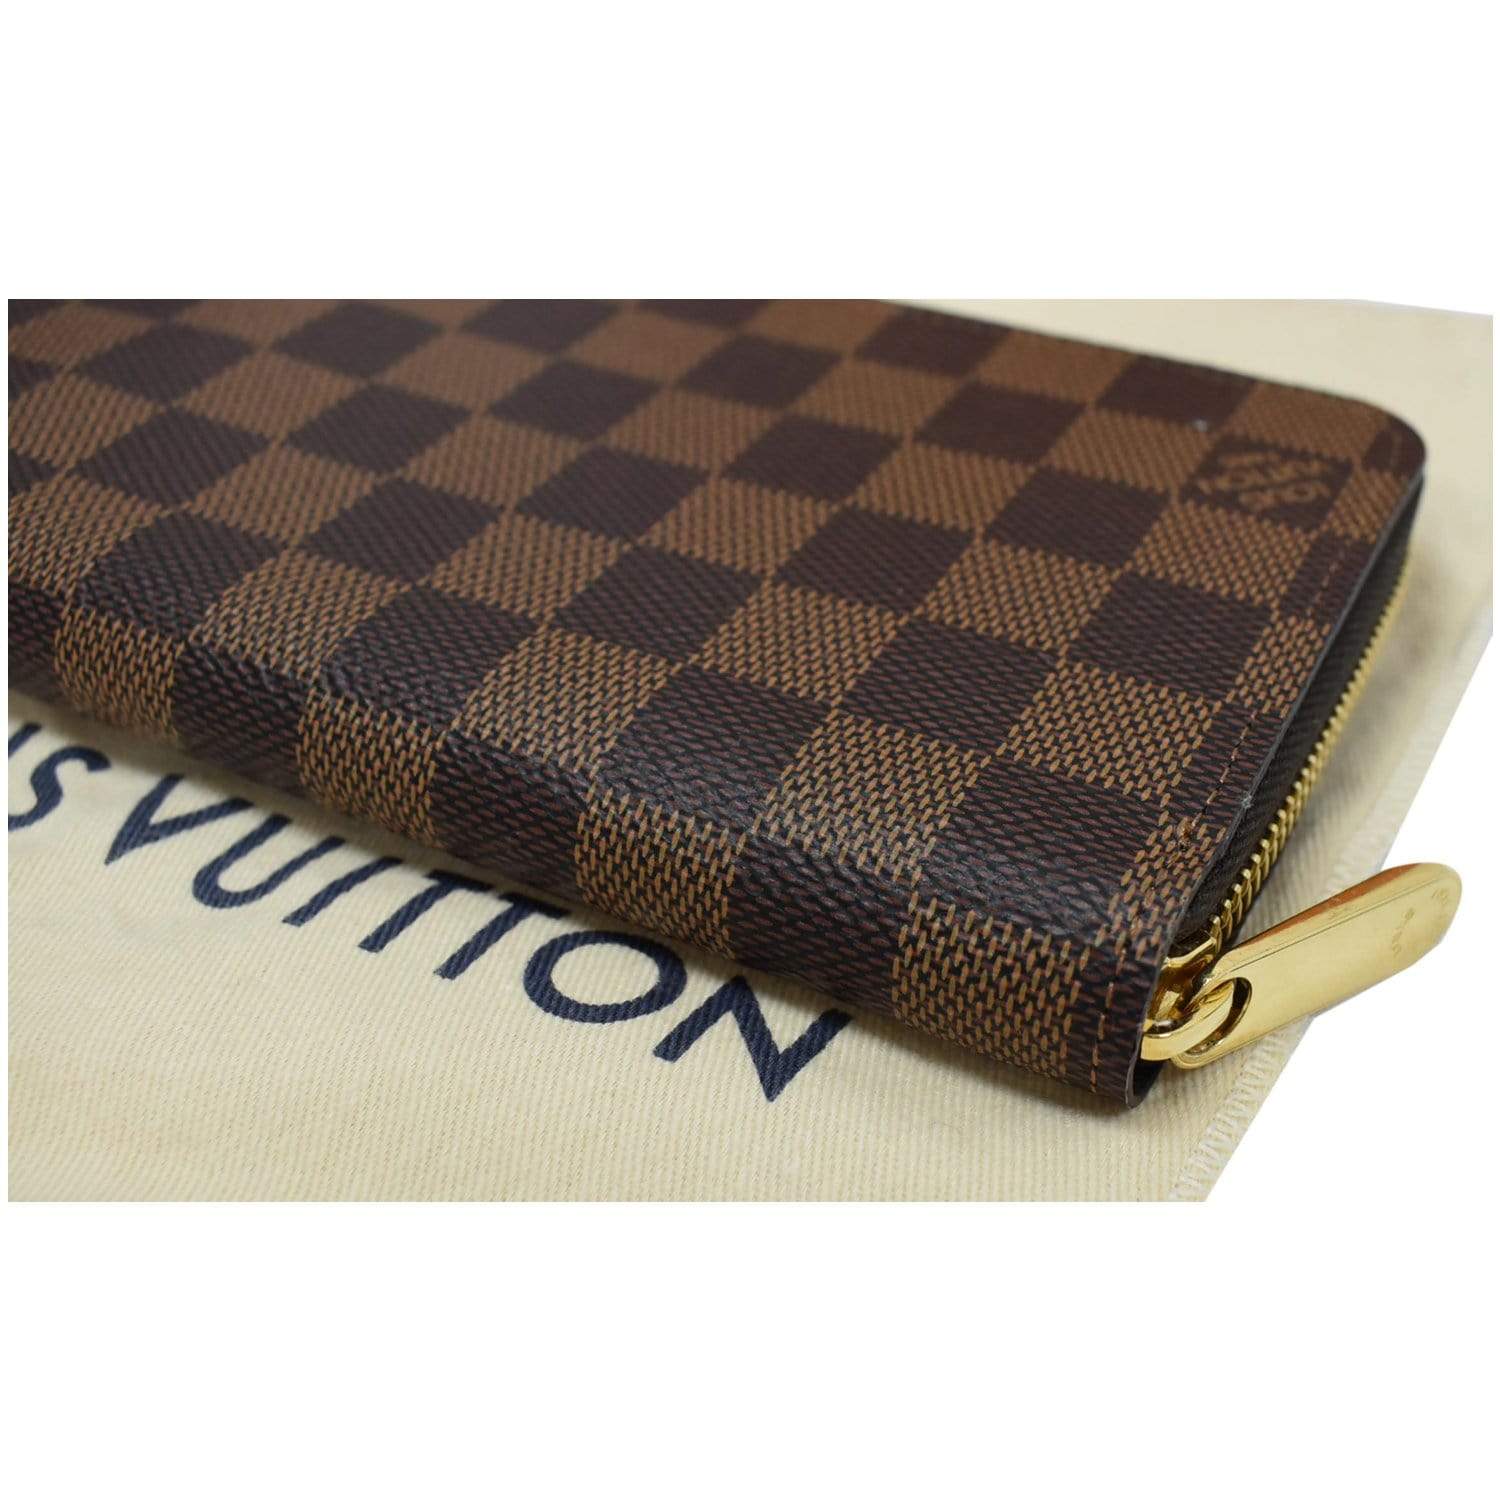 Louis Vuitton ZIPPY ORGANISER wallet: DAMIER EBENE